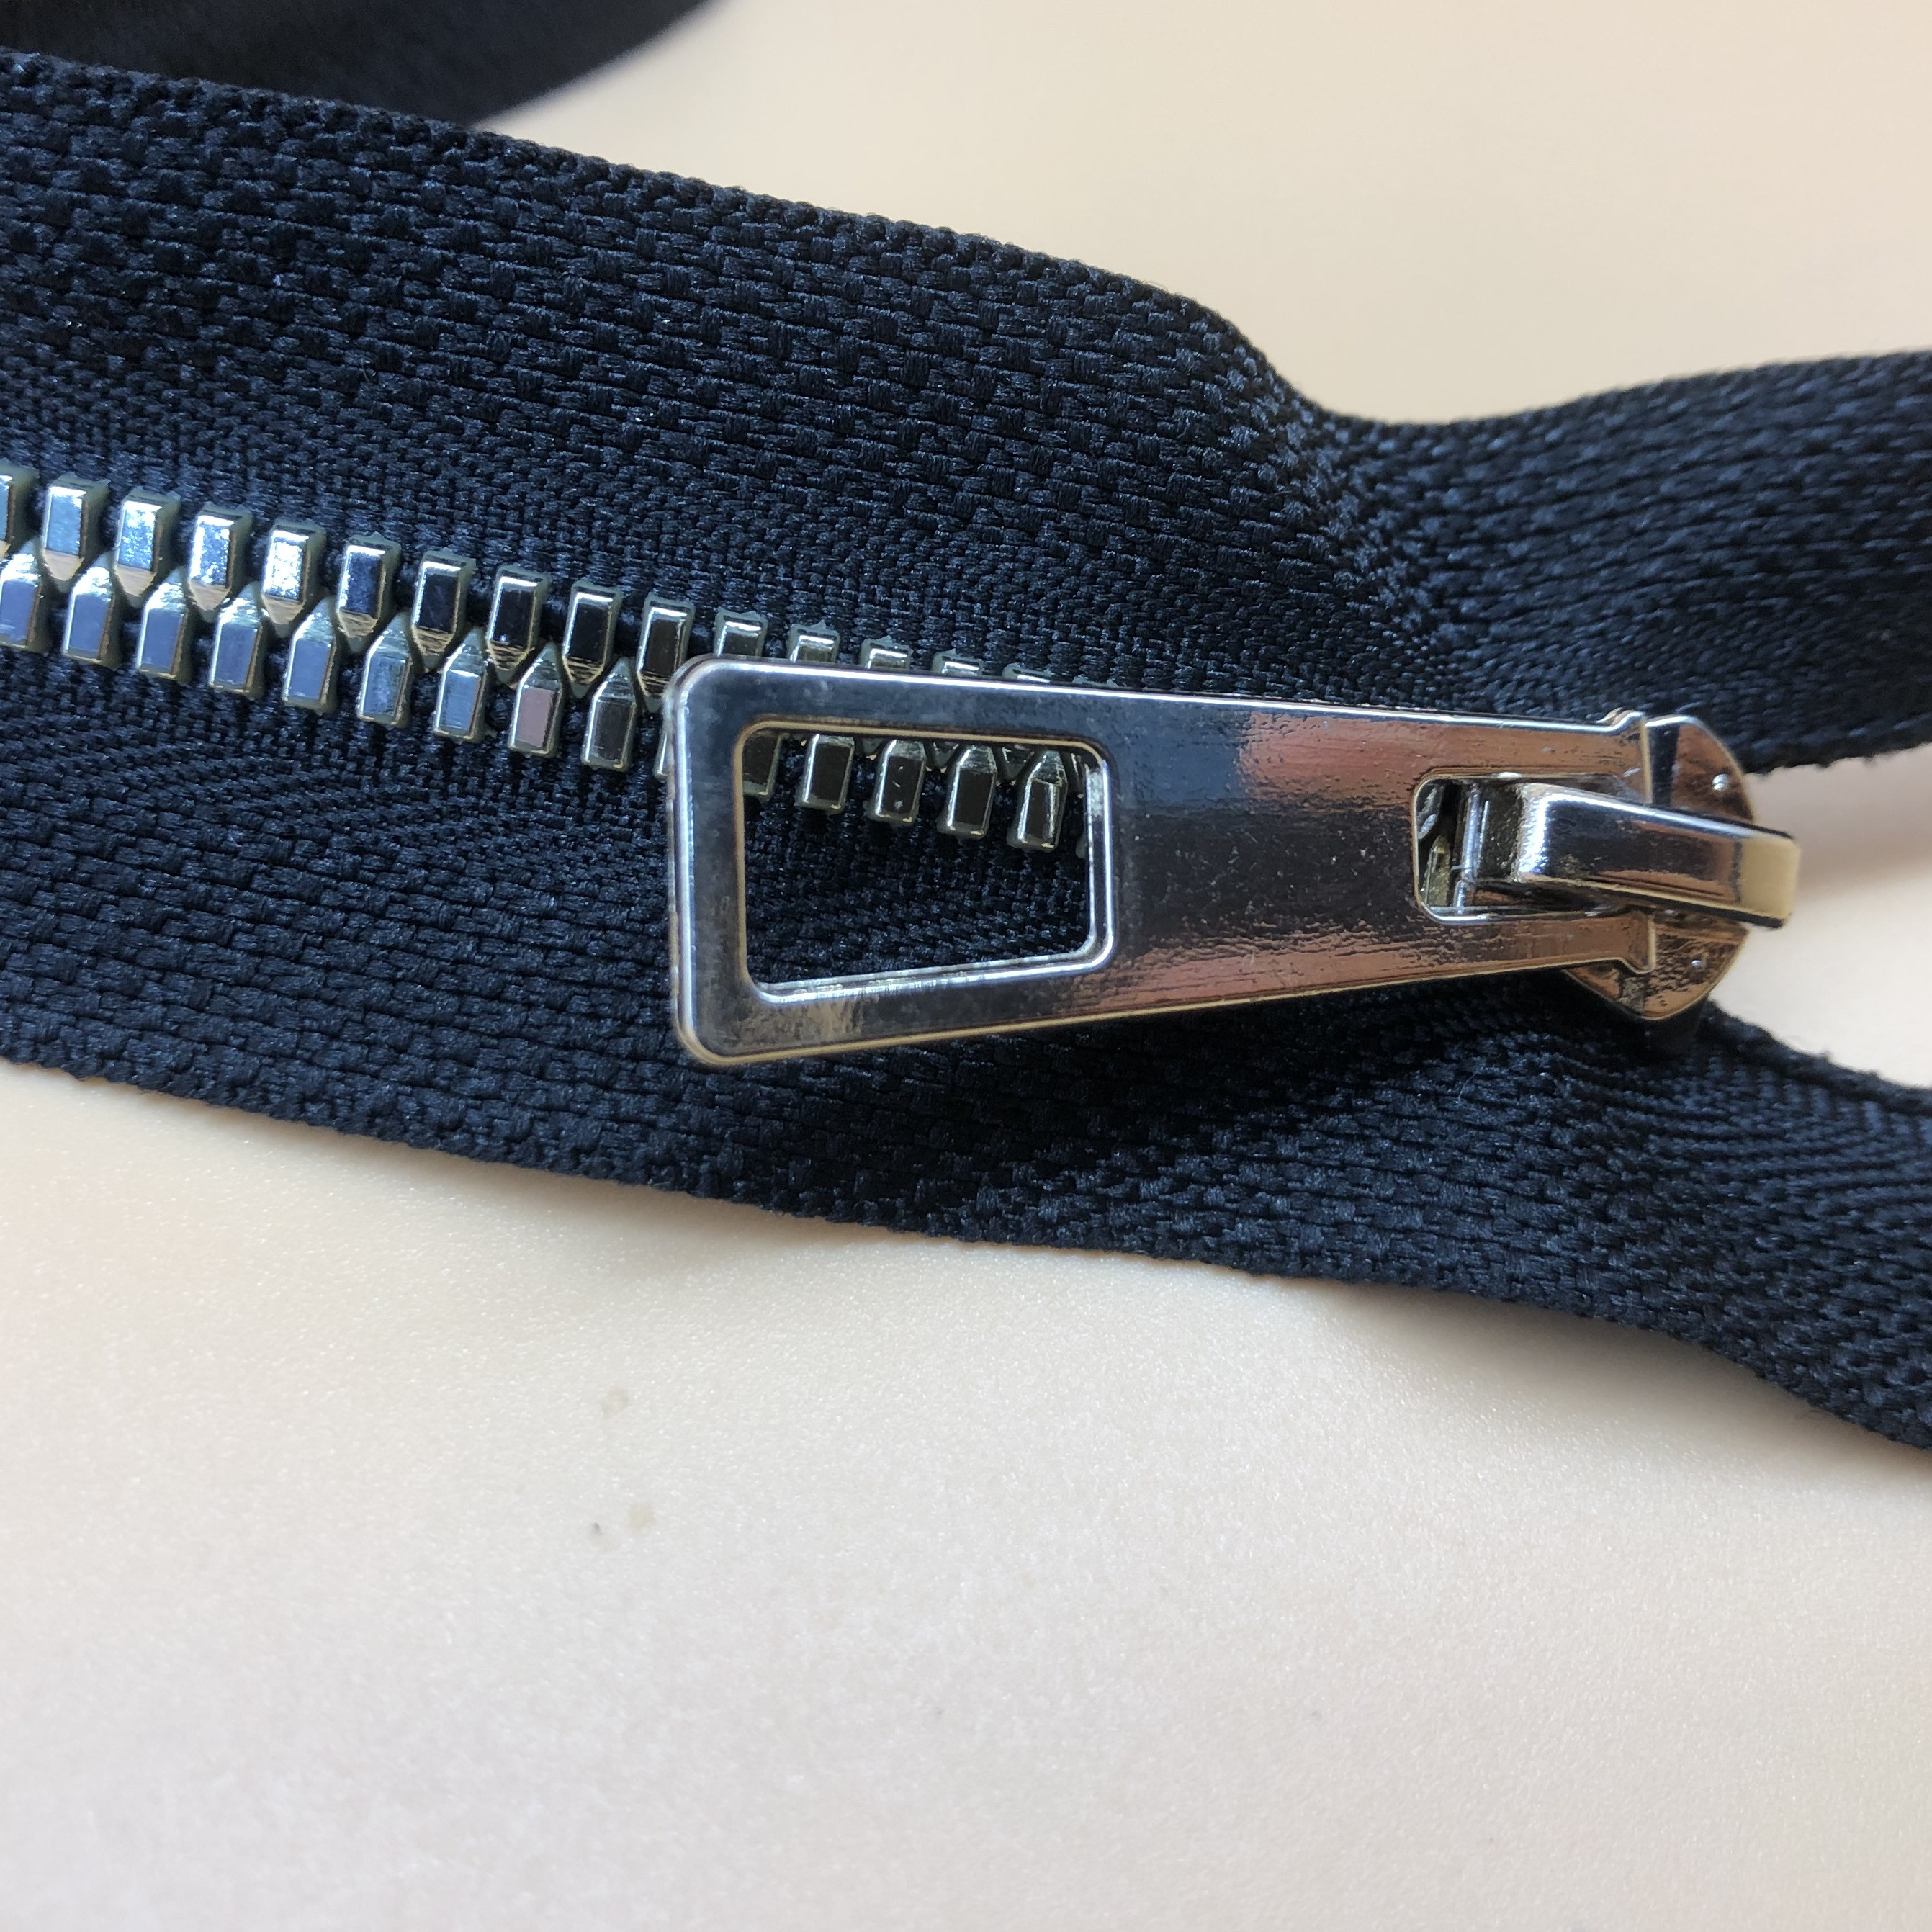 joaoxoko Zipper Repair Kit,12Pcs Zipper Pull Replacement for Repairing  Coats,Jackets, Metal Plastic and Nylon Coil Zippers, Luggage,Black Zippers  for